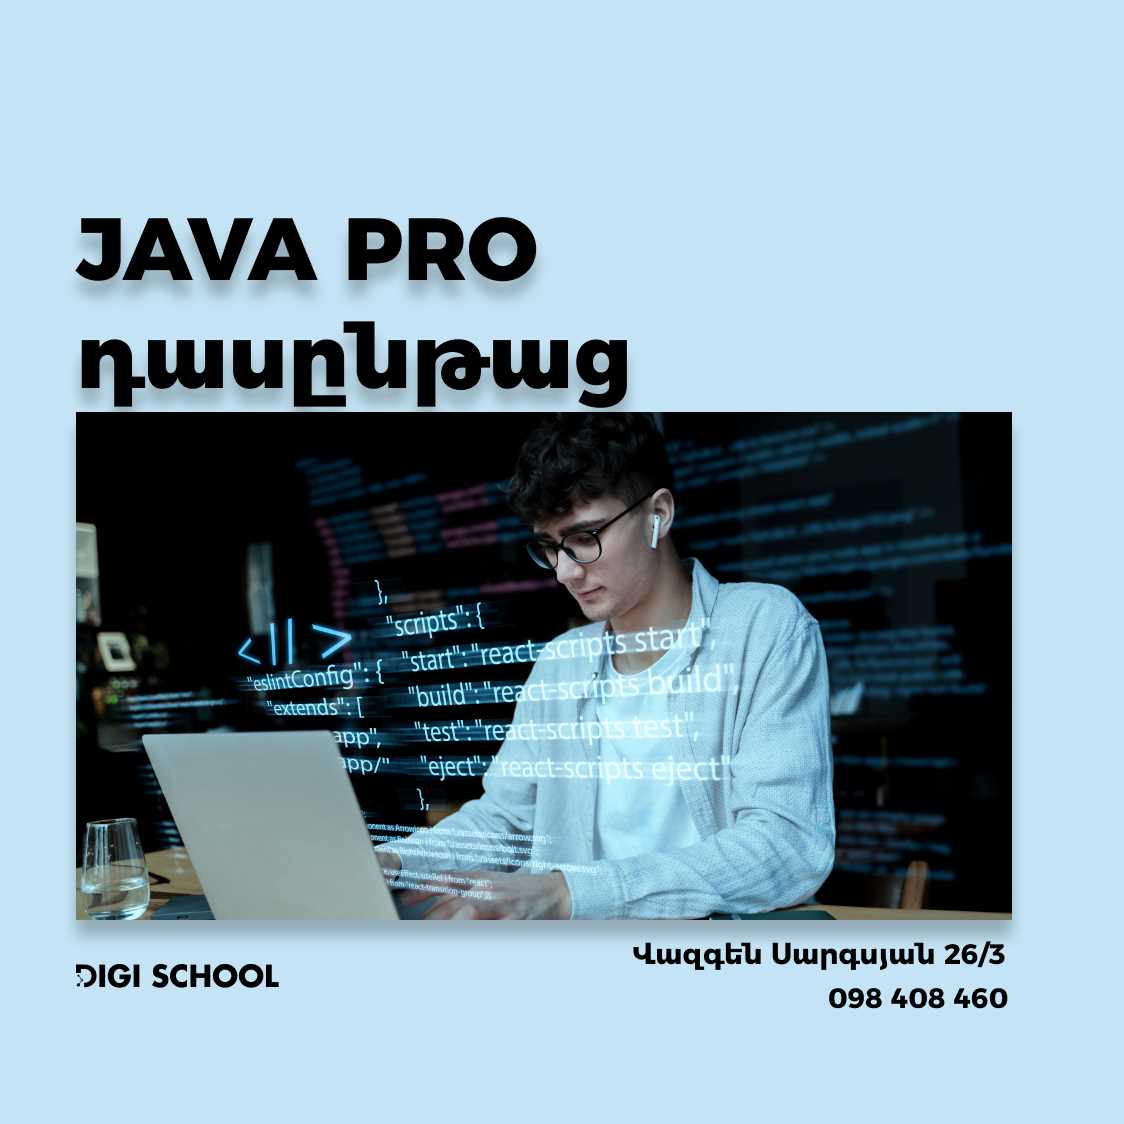 Java Pro դասընթաց 